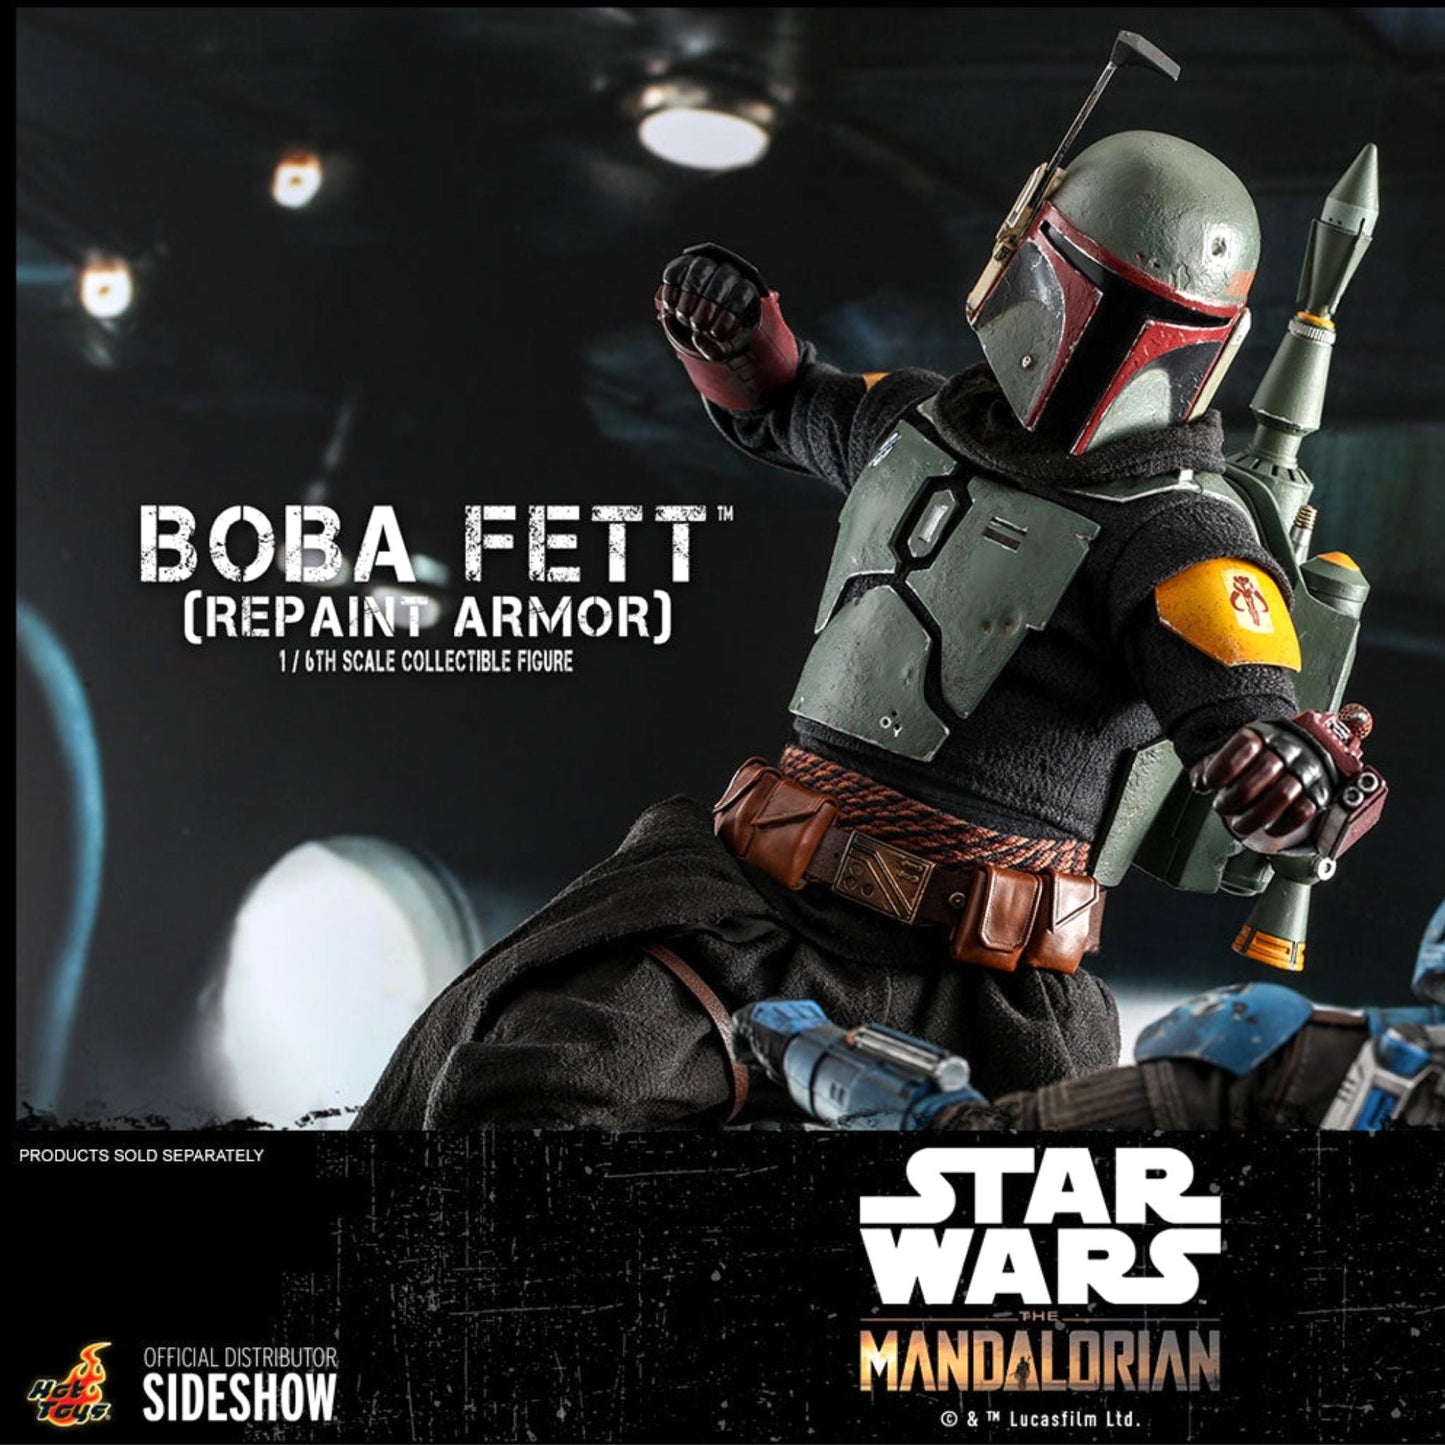 Boba Fett (Repaint Armor) Star Wars: The Mandalorian 1:6 Figure by Hot Toys